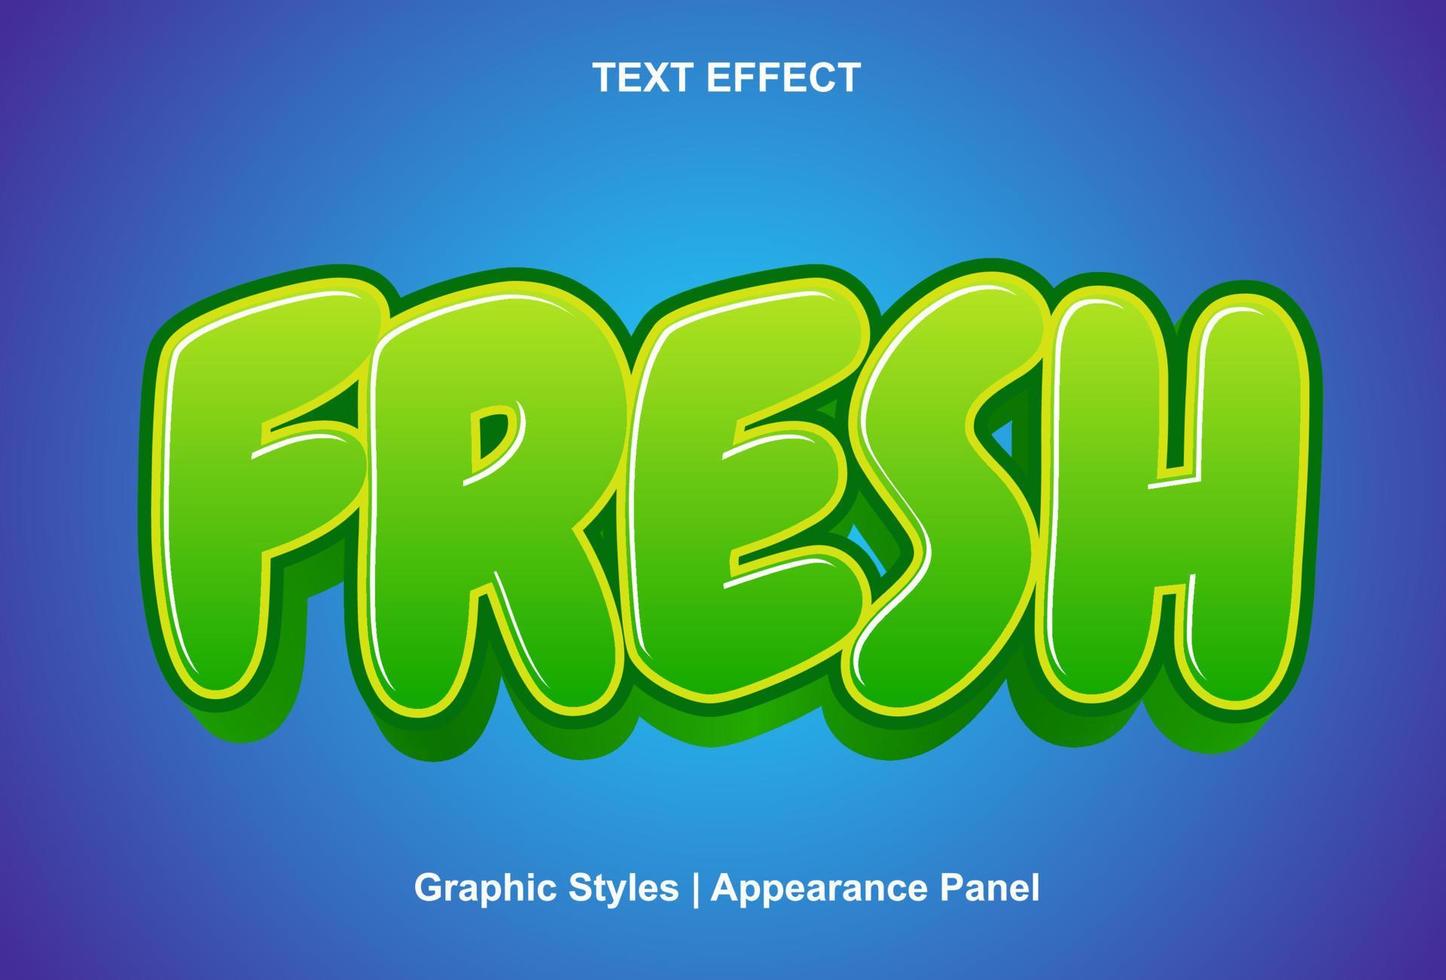 efecto de texto fresco con estilo de texto y editable vector